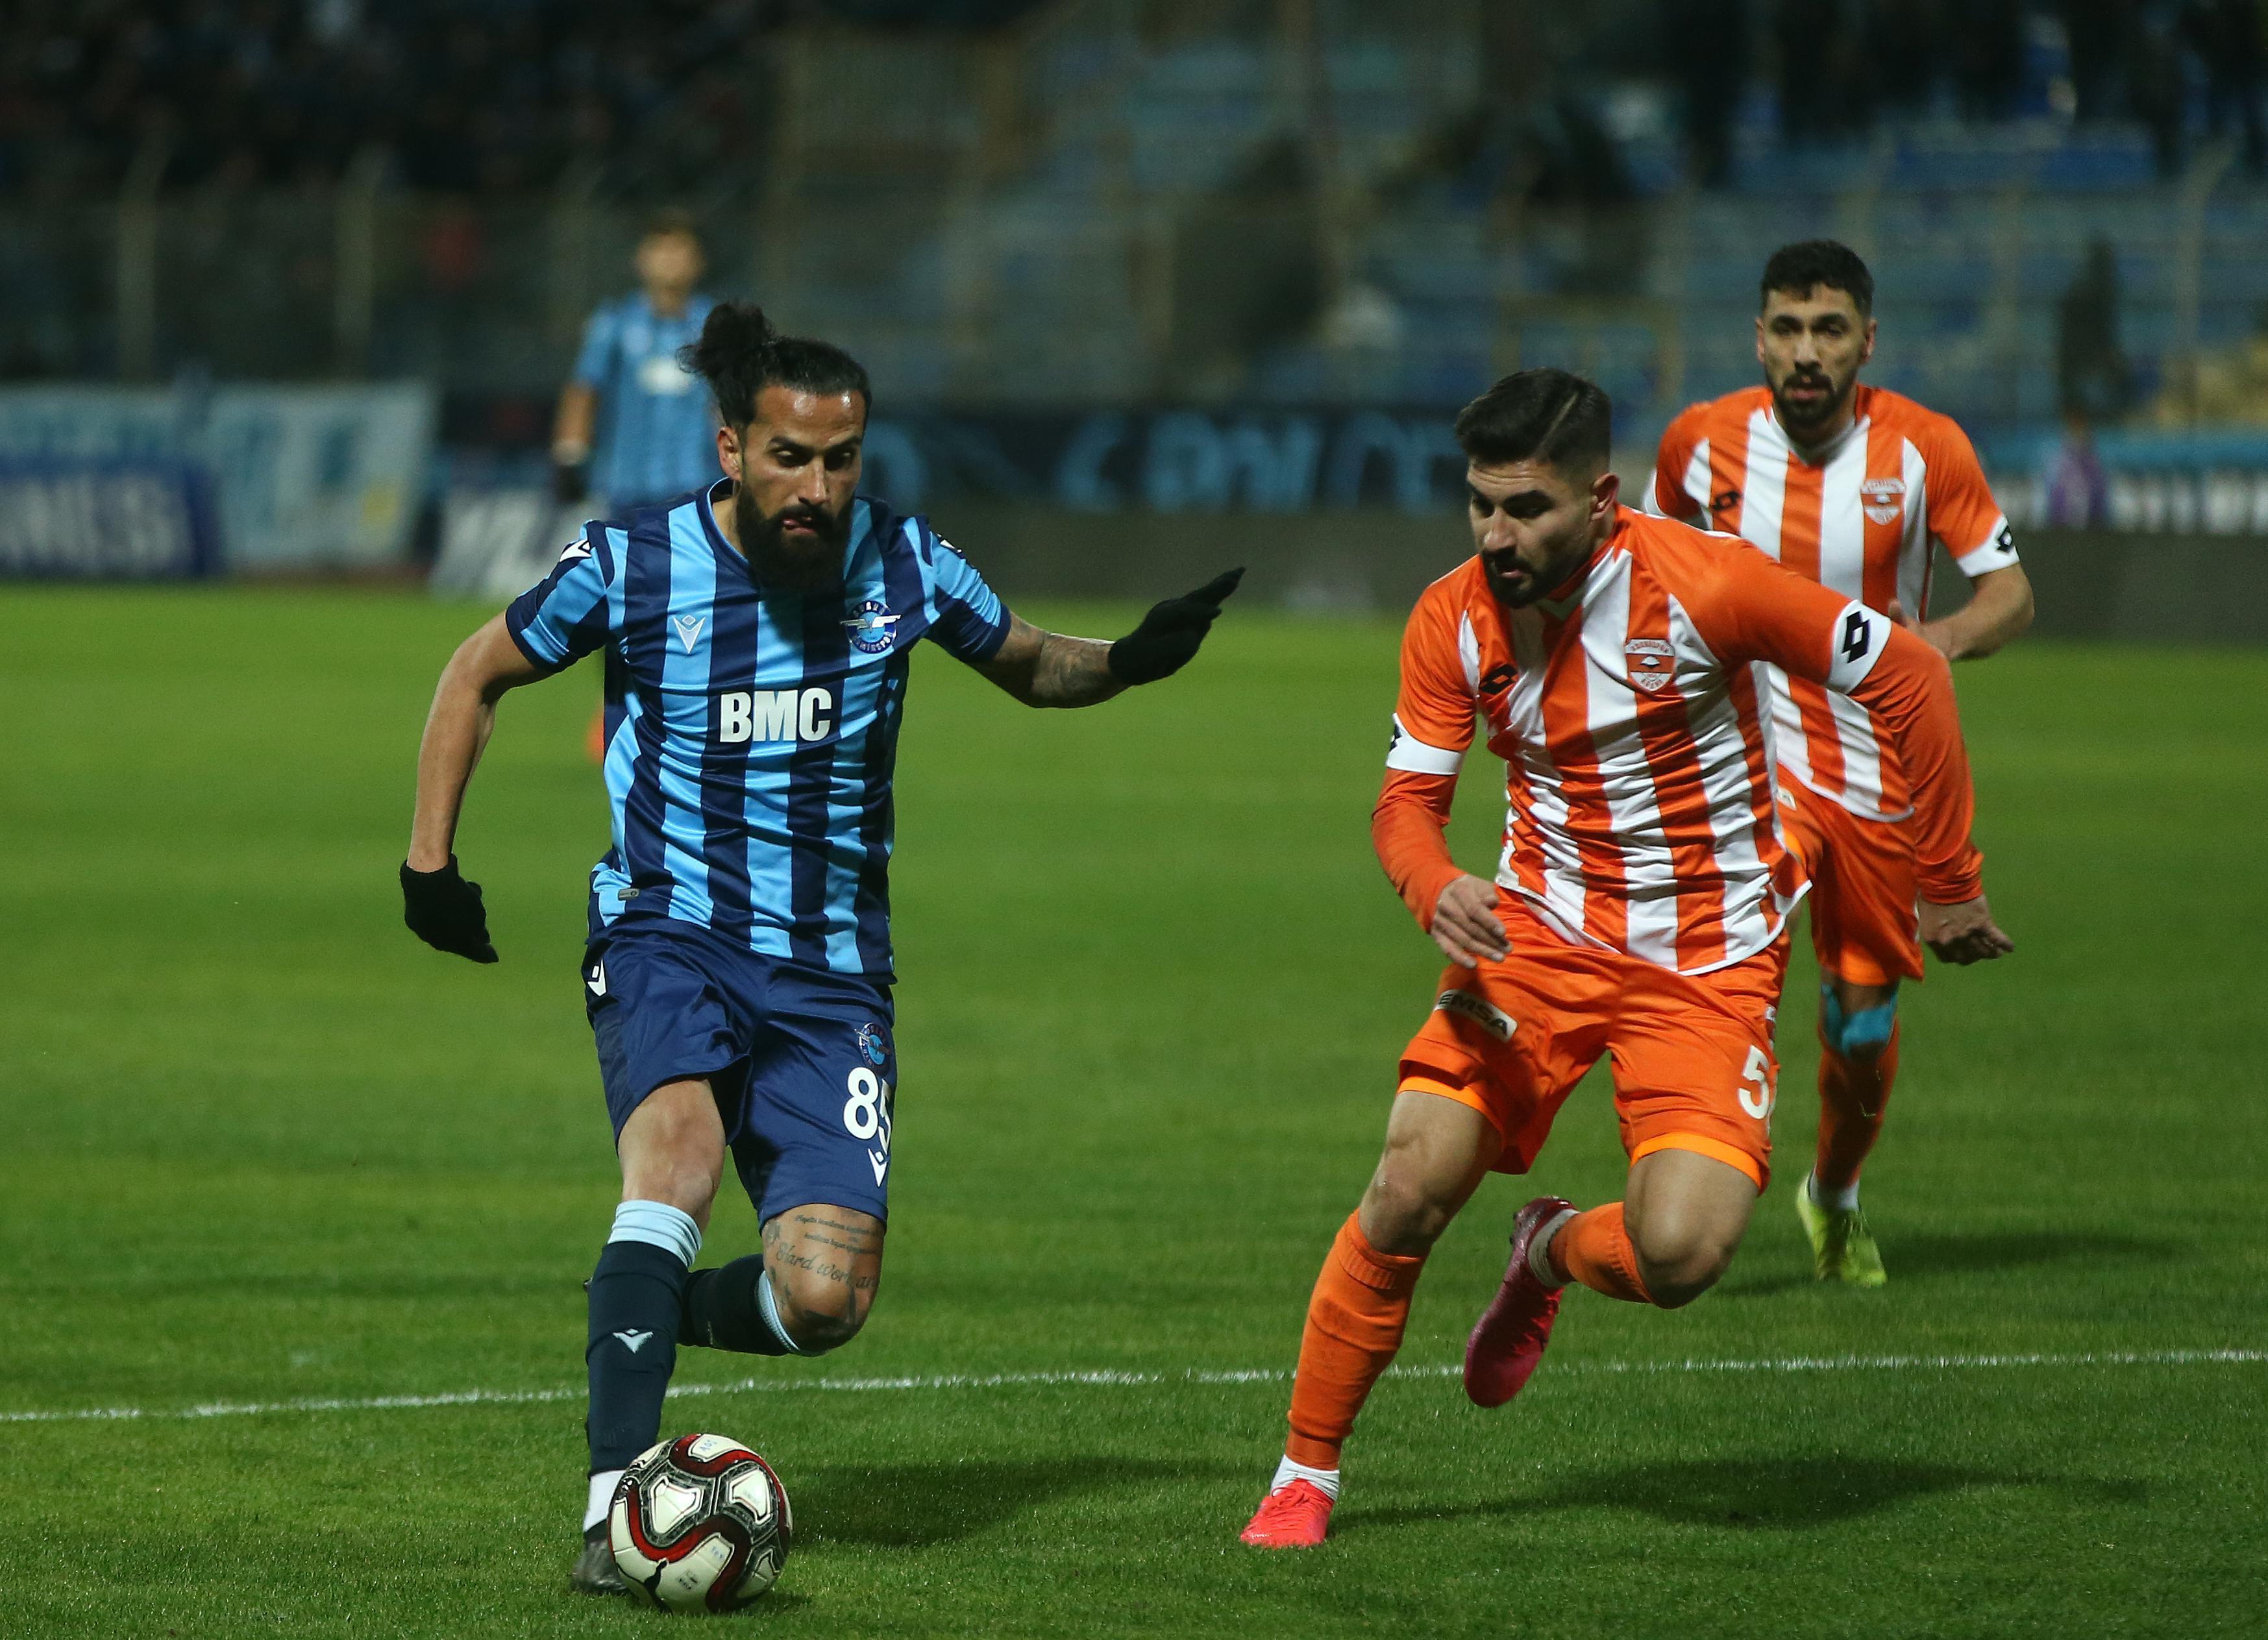 (ÖZET) Adana Demirspor - Adanaspor maç sonucu: 4-1